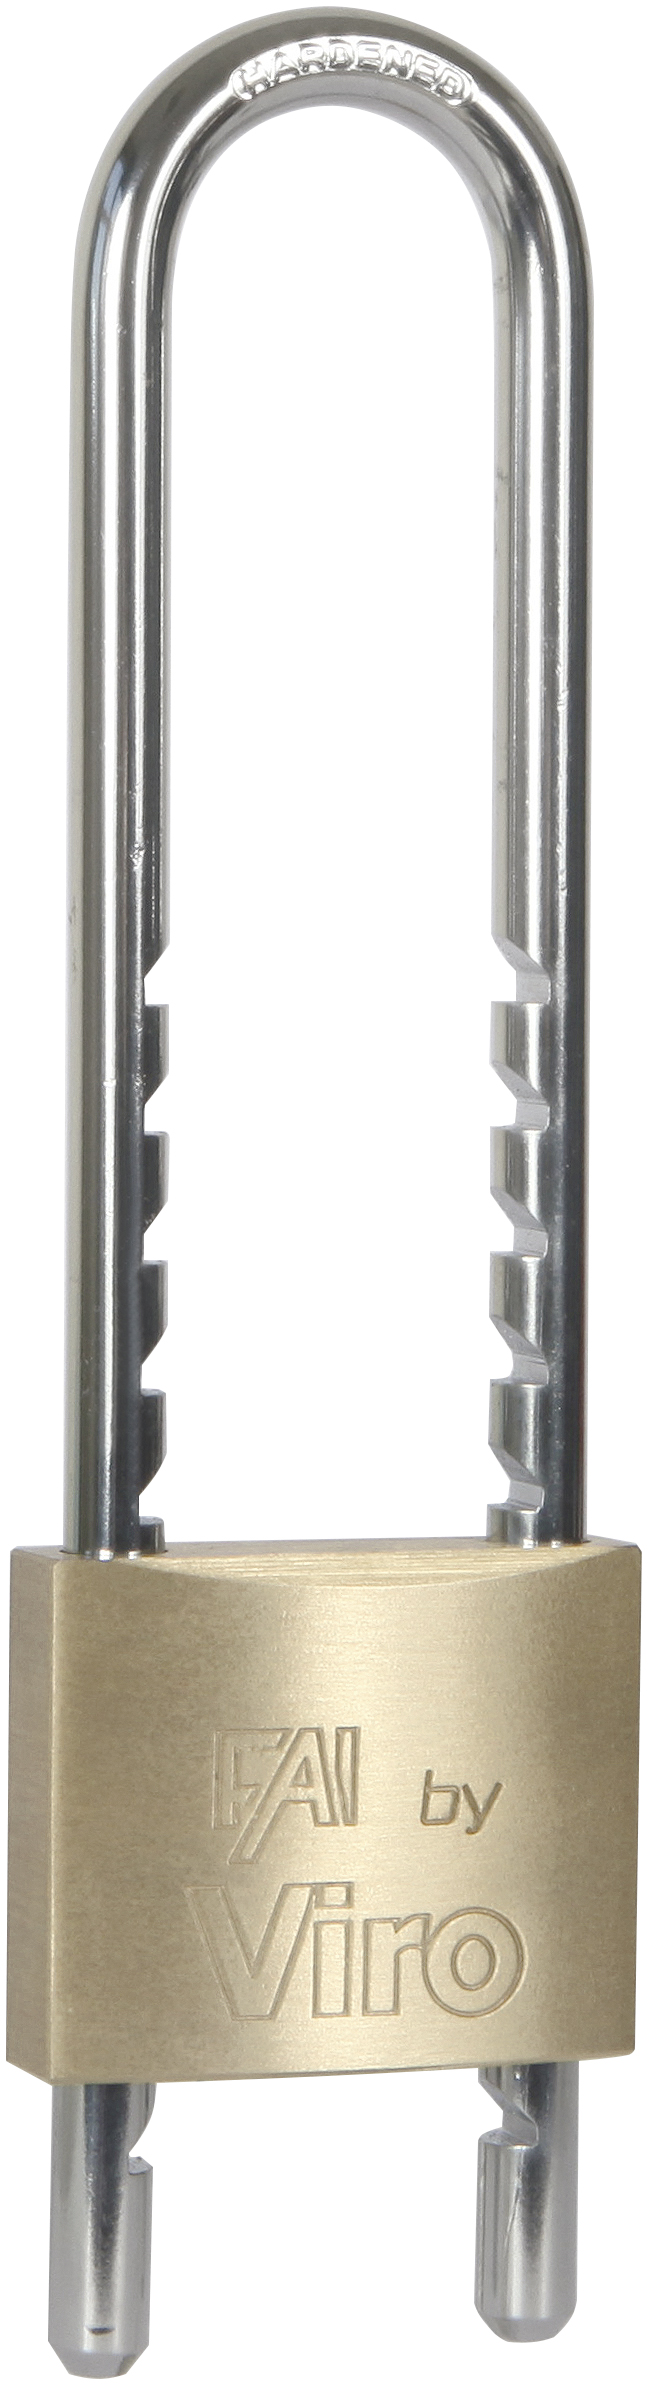 VIRO - Fai by Viro rectangular padlock with adjustable shackle